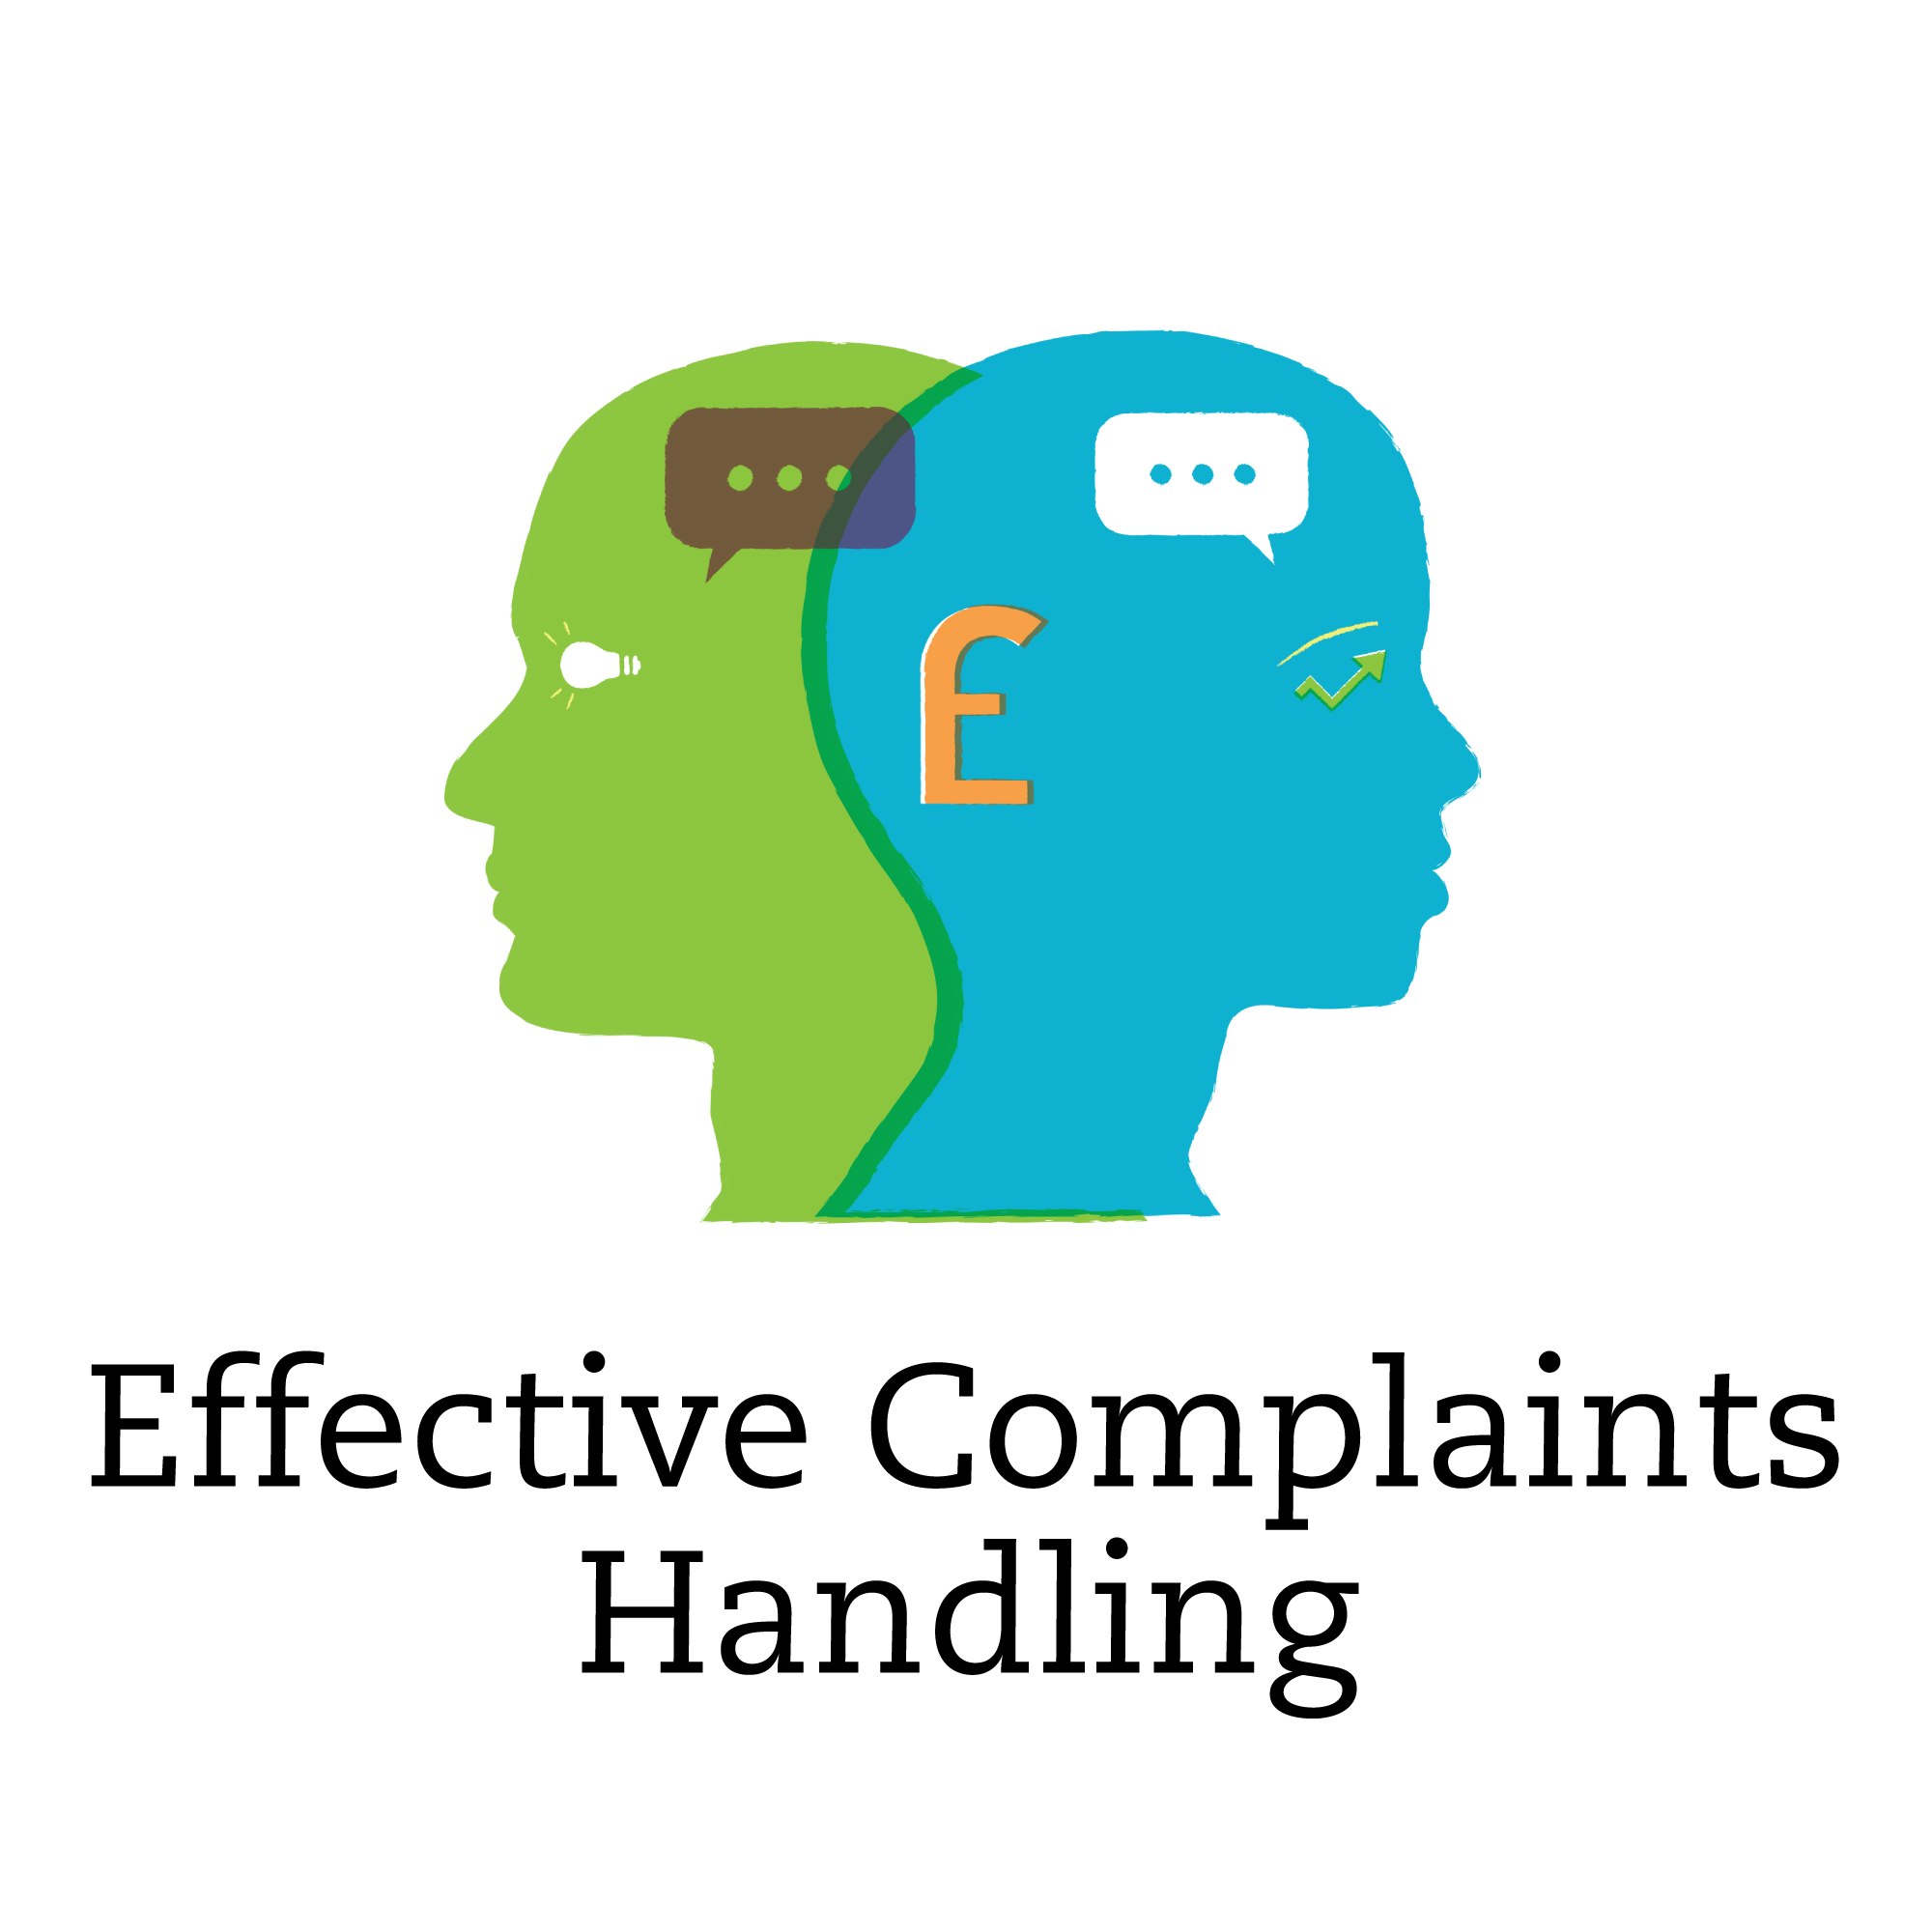 Introduction to Effective Complaints Handling (22 April 2022)